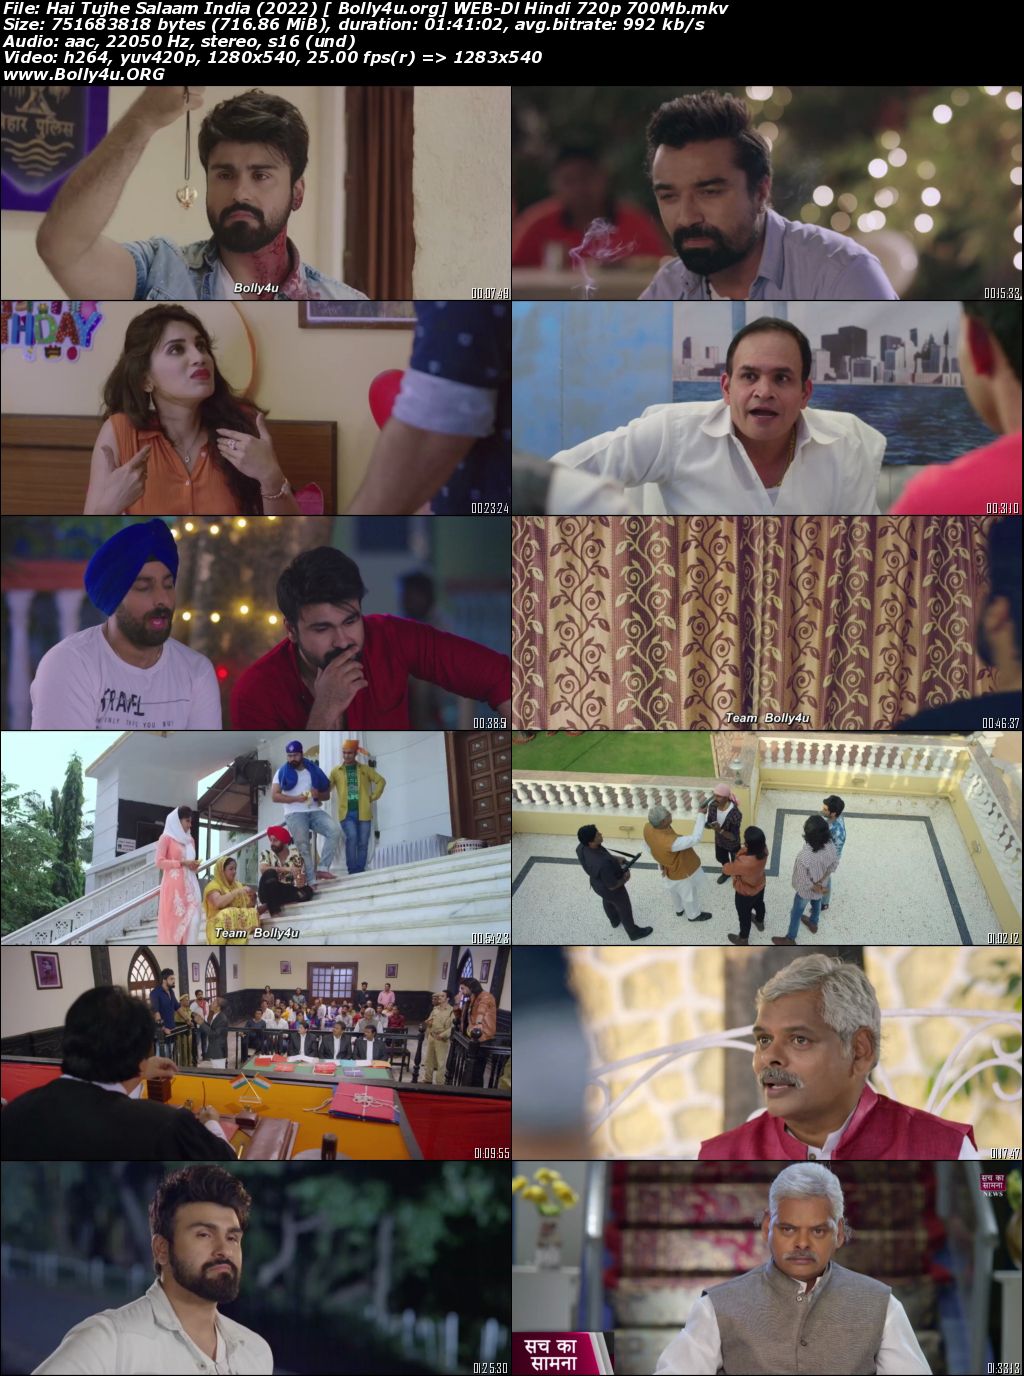 Hai Tujhe Salaam India 2022 WEB-DL Hindi Movie Download 720p 480p